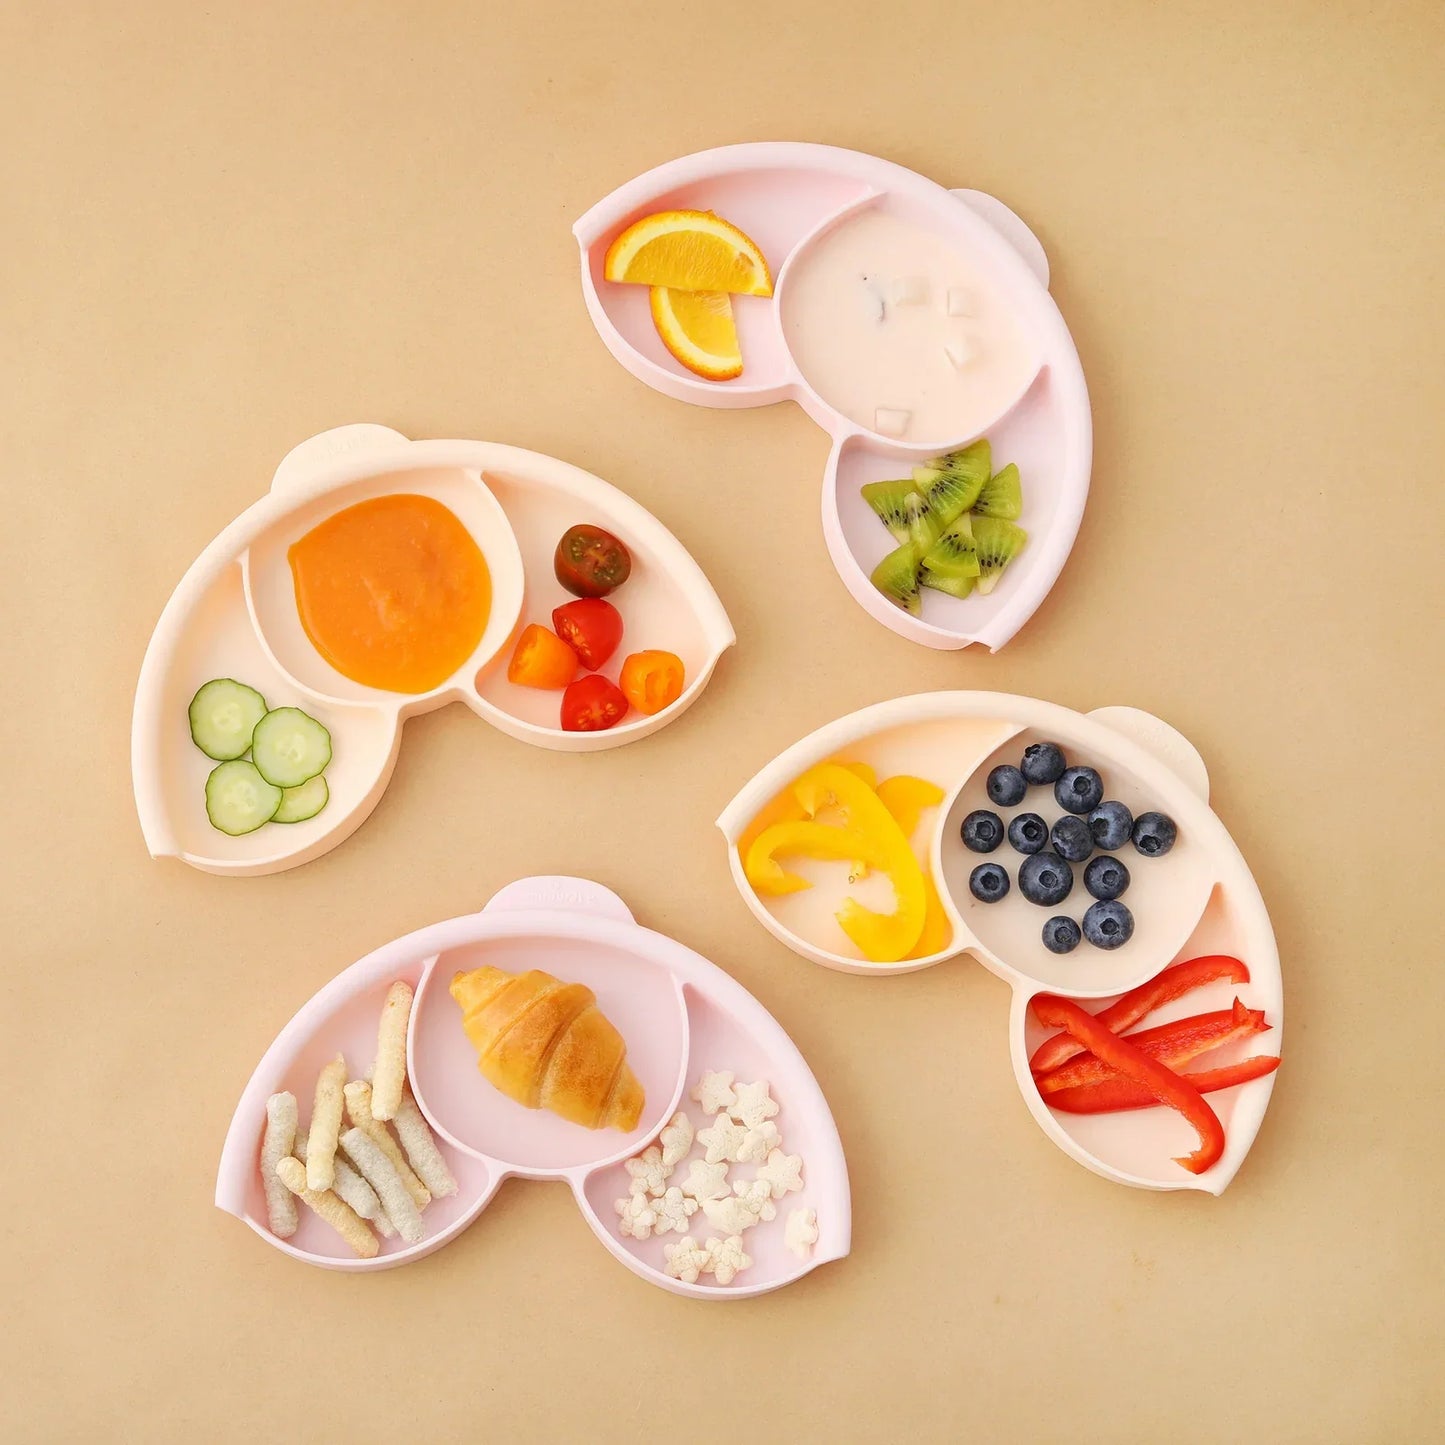 Healthy Meal Sett - Diskar 2in1 - Toffee/Peach